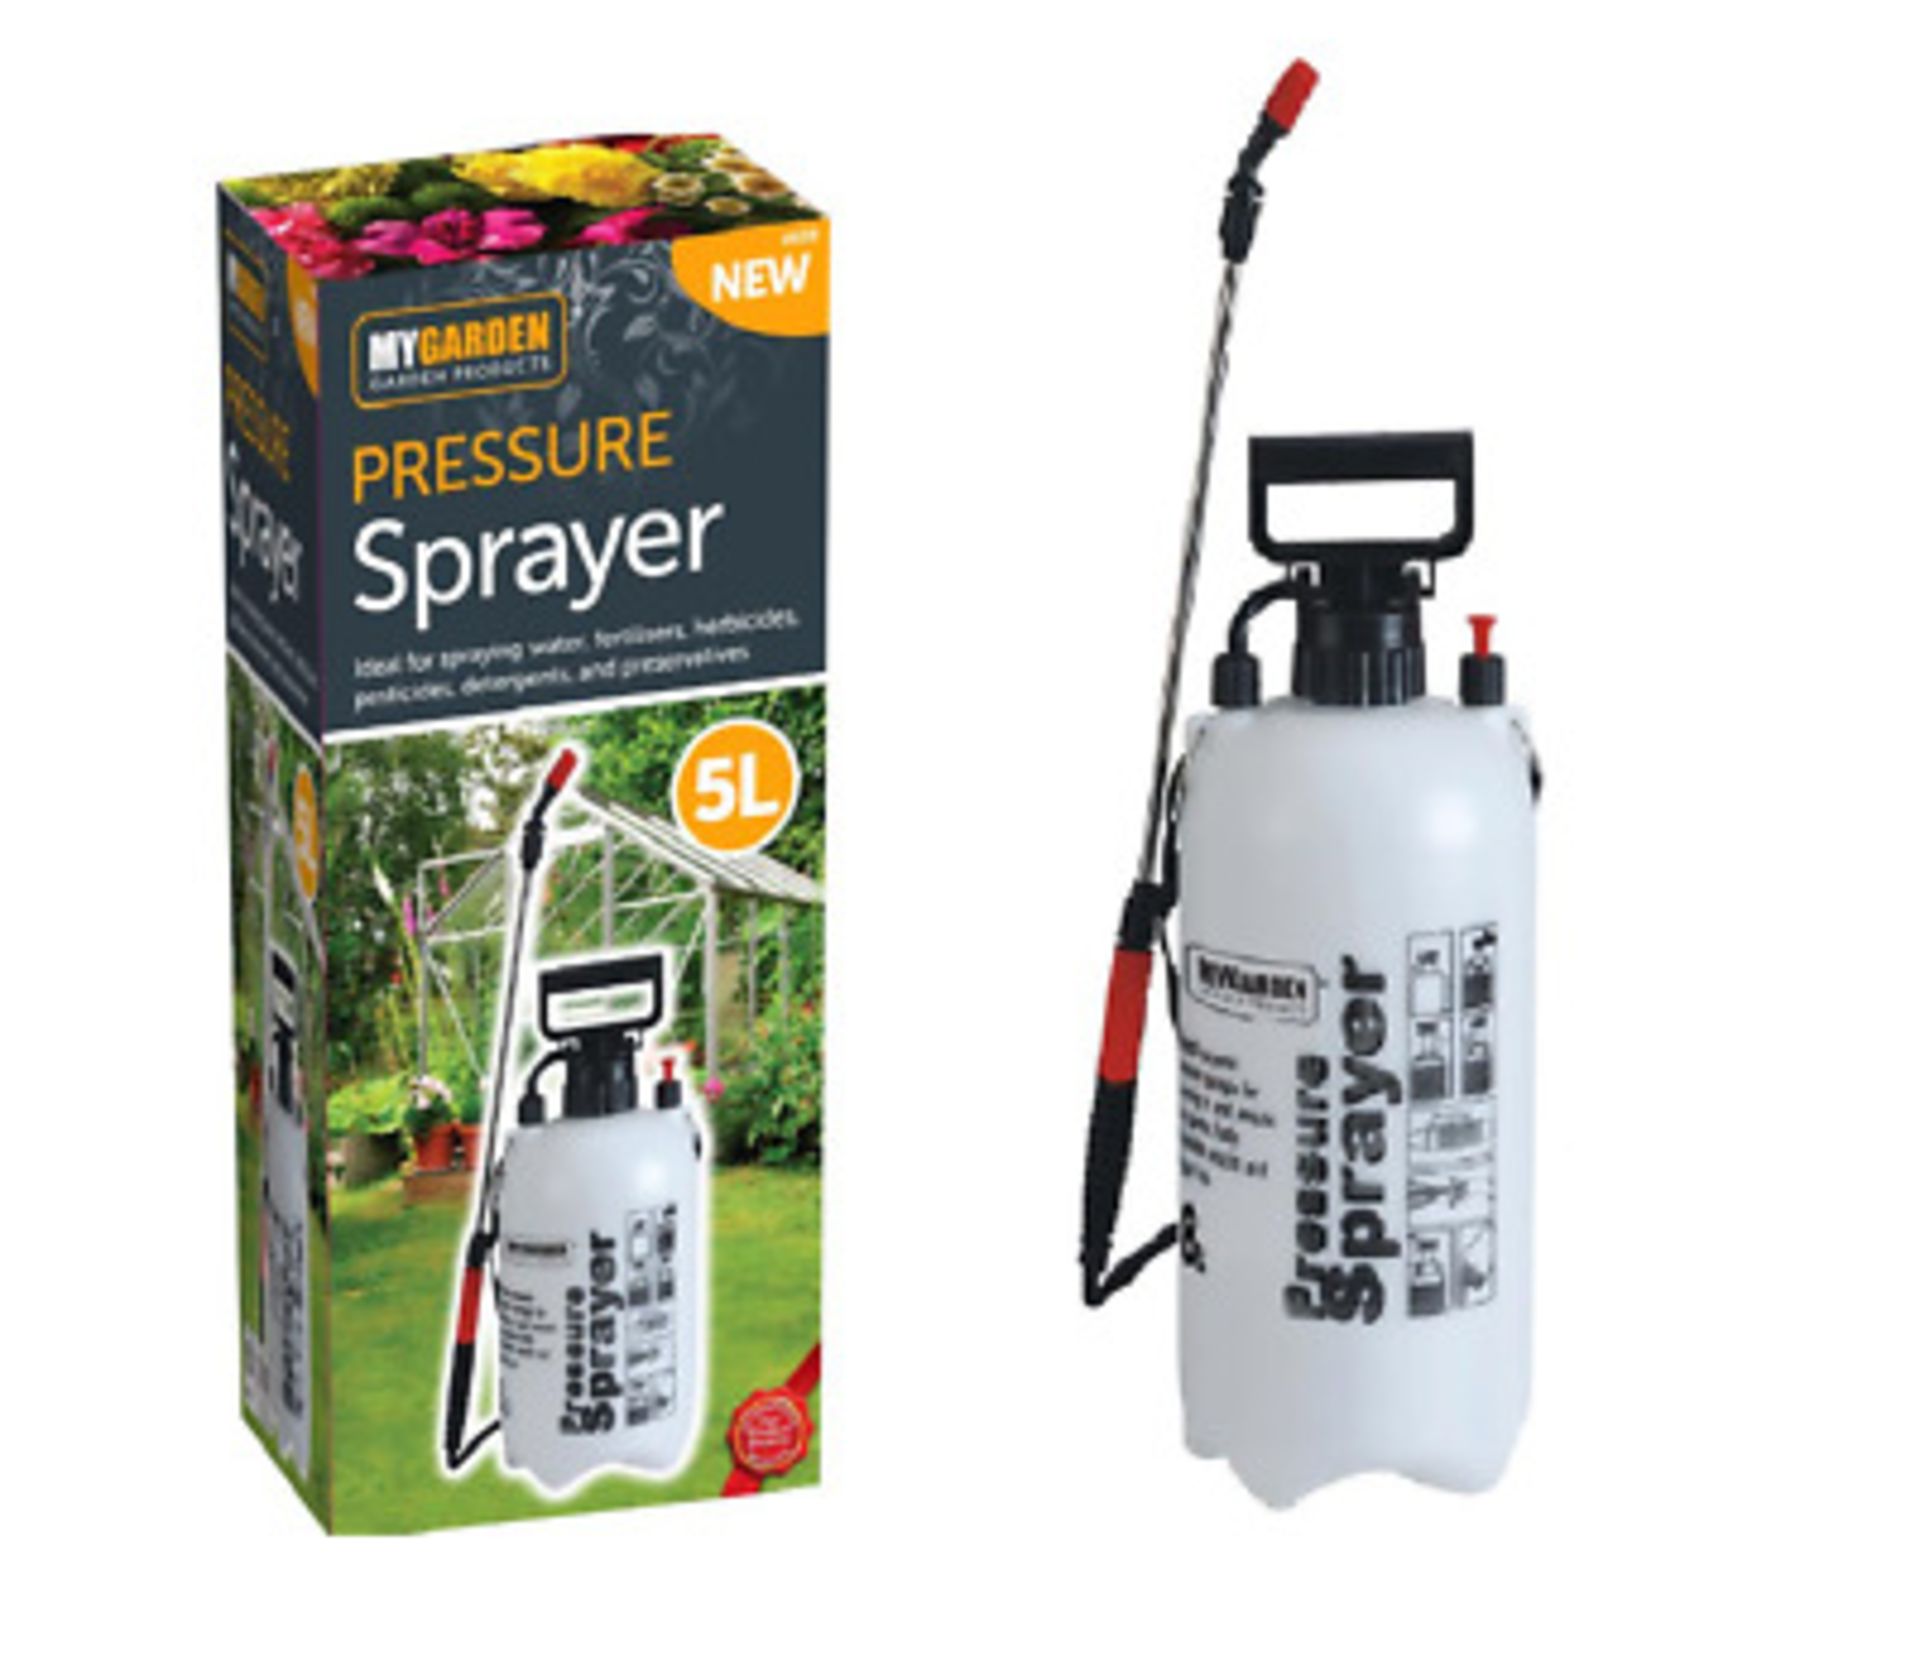 V Brand New 5L Garden Pressure Sprayer - Ideal For Spraying Water - Fertilisers - Herbicides -